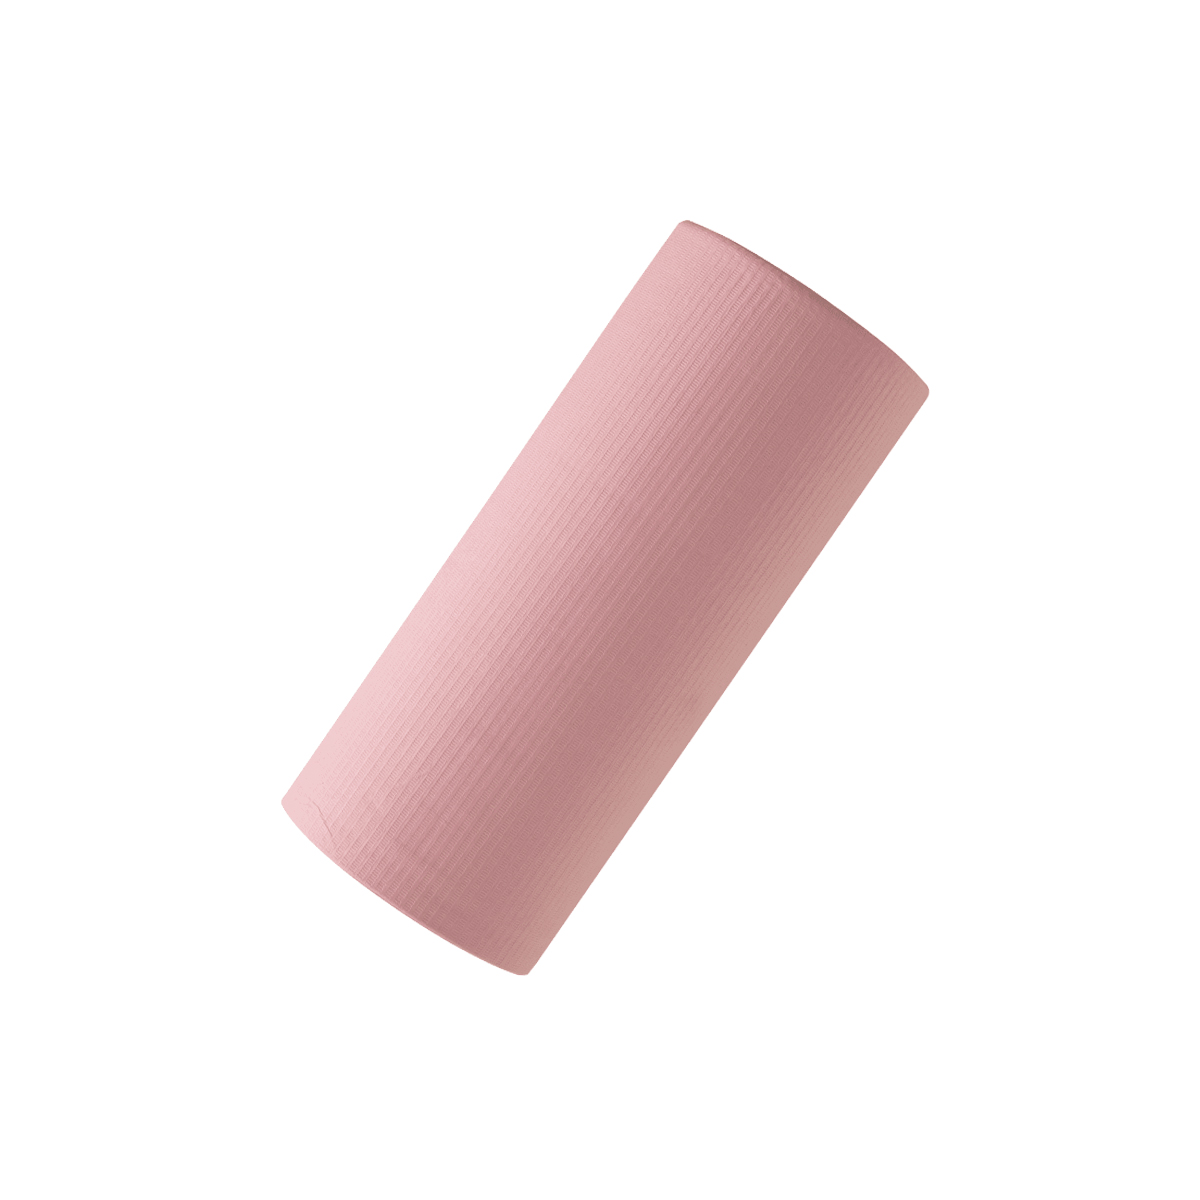 Monoart Patientenumhänge PG30 Farbe: rosa (Euronda)